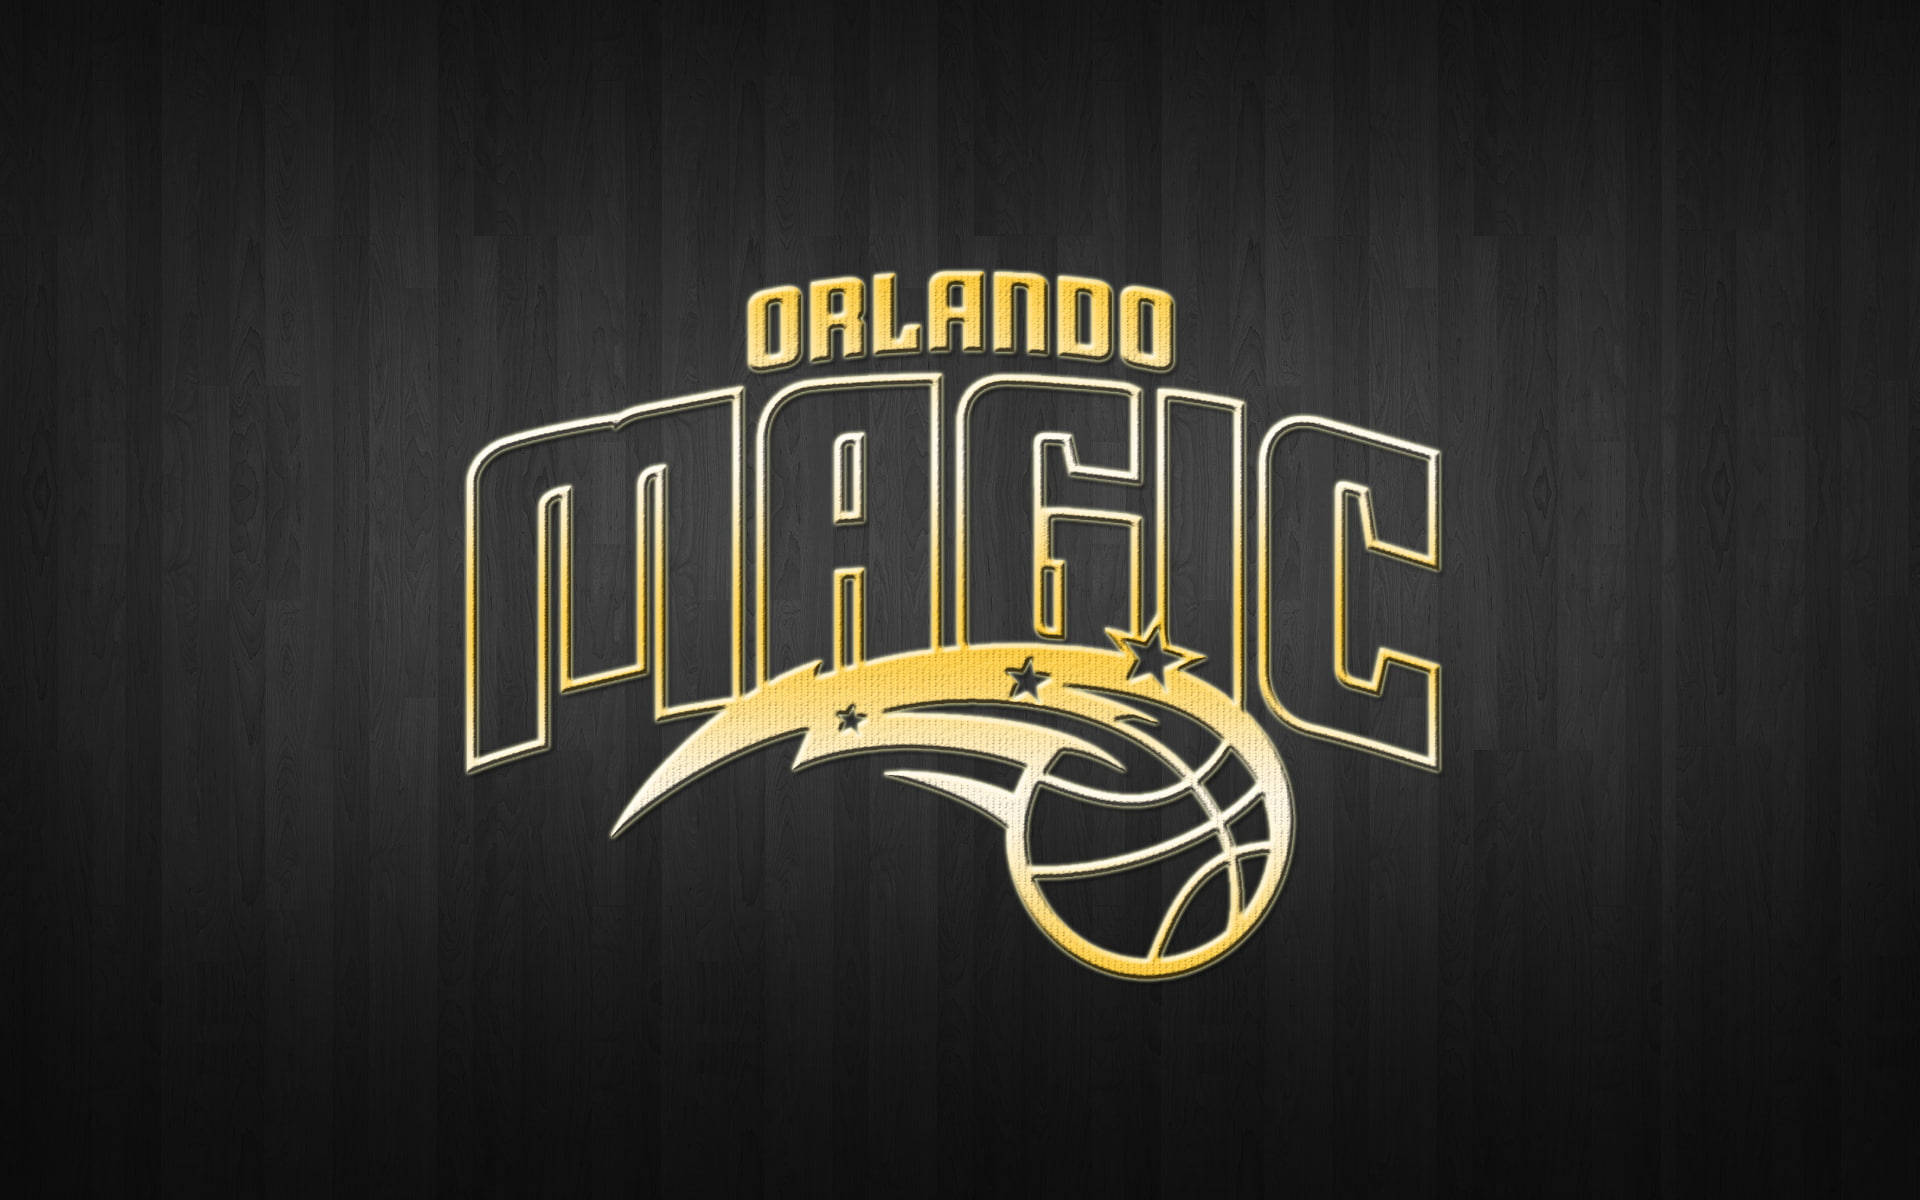 Orlando Magic In Gray Wood Floor Background